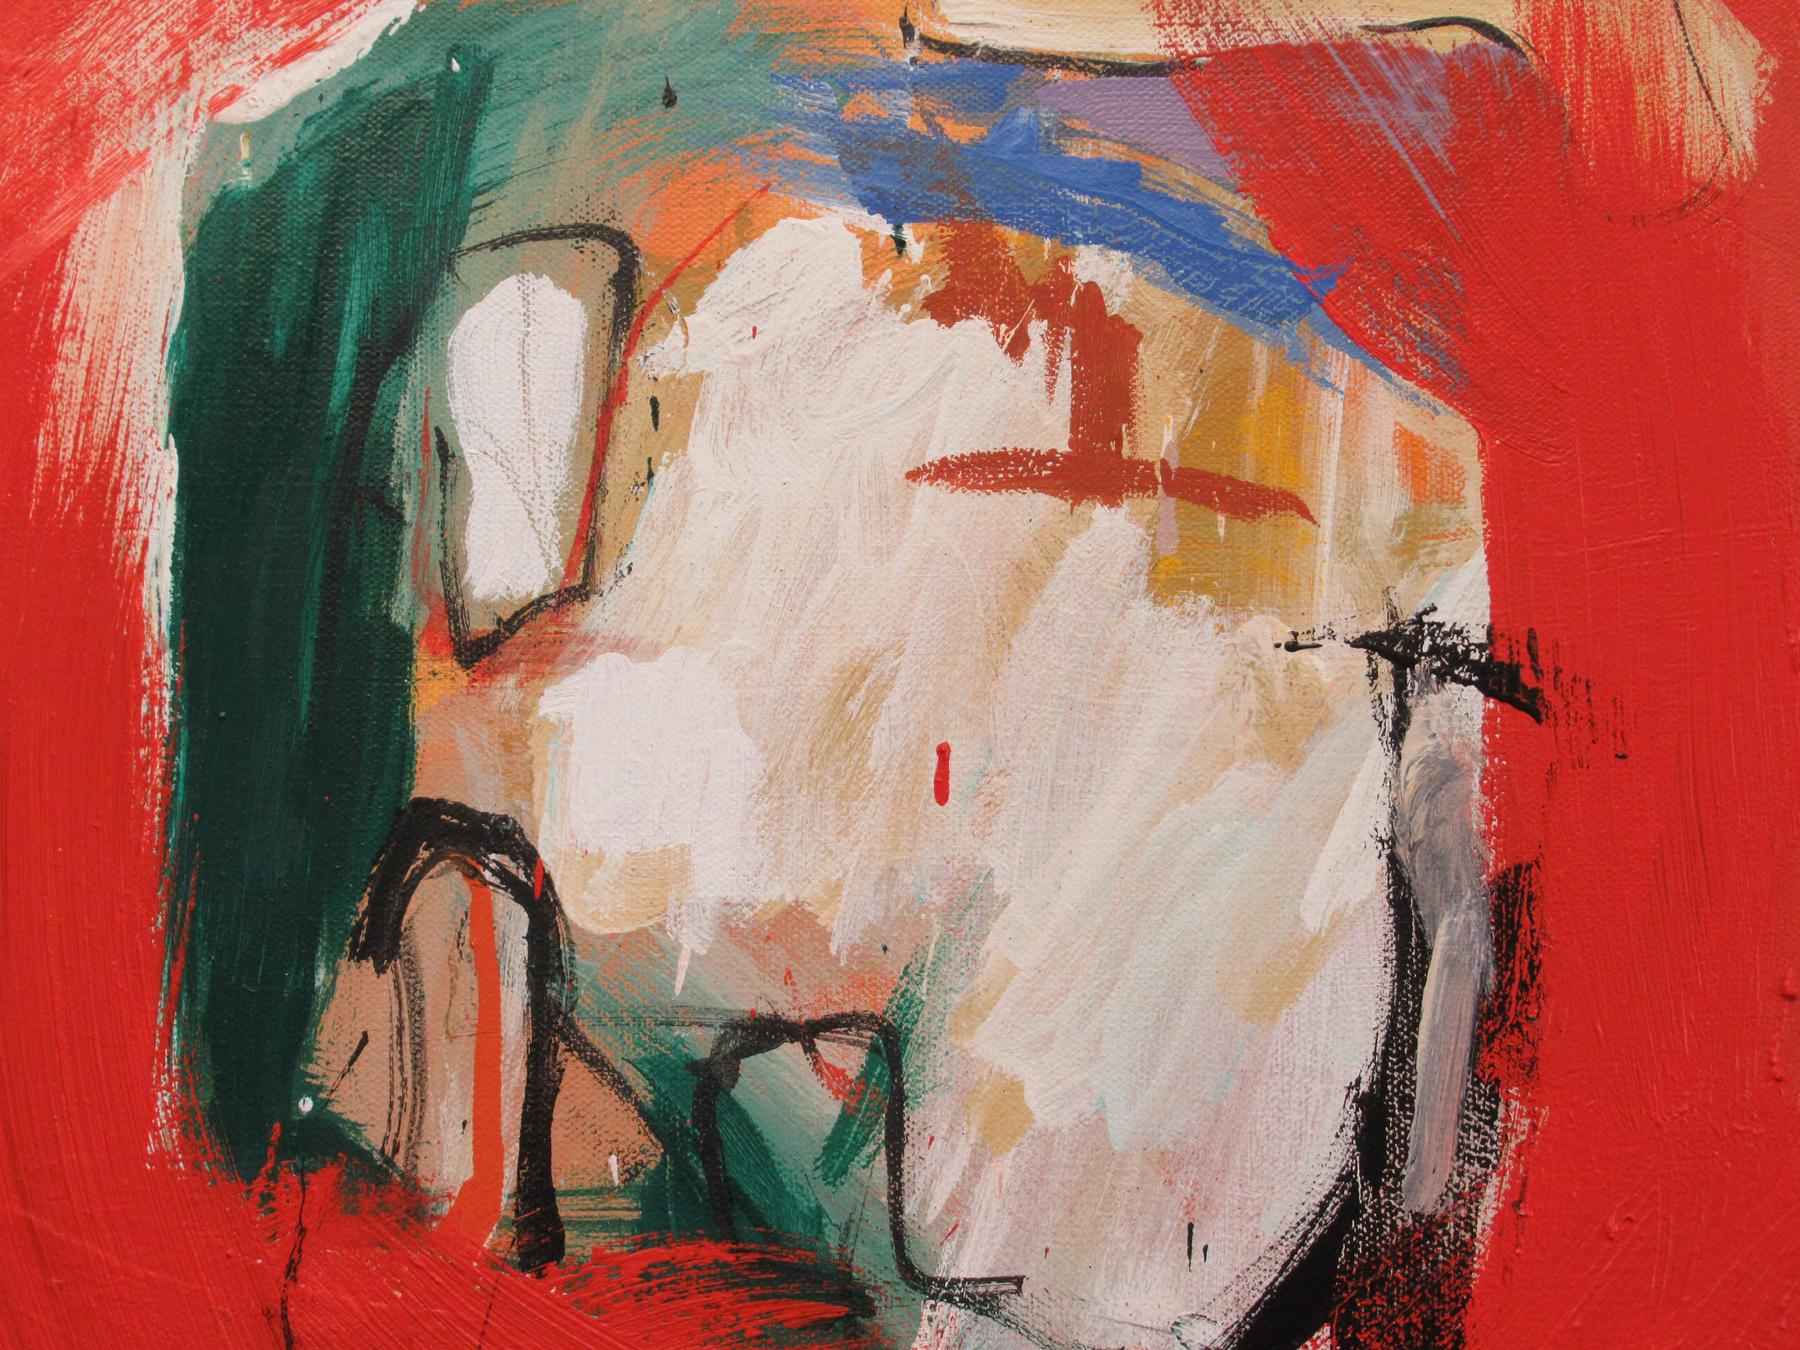 SONGBIRDS, peinture originale contemporaine expressionniste abstraite rouge
36